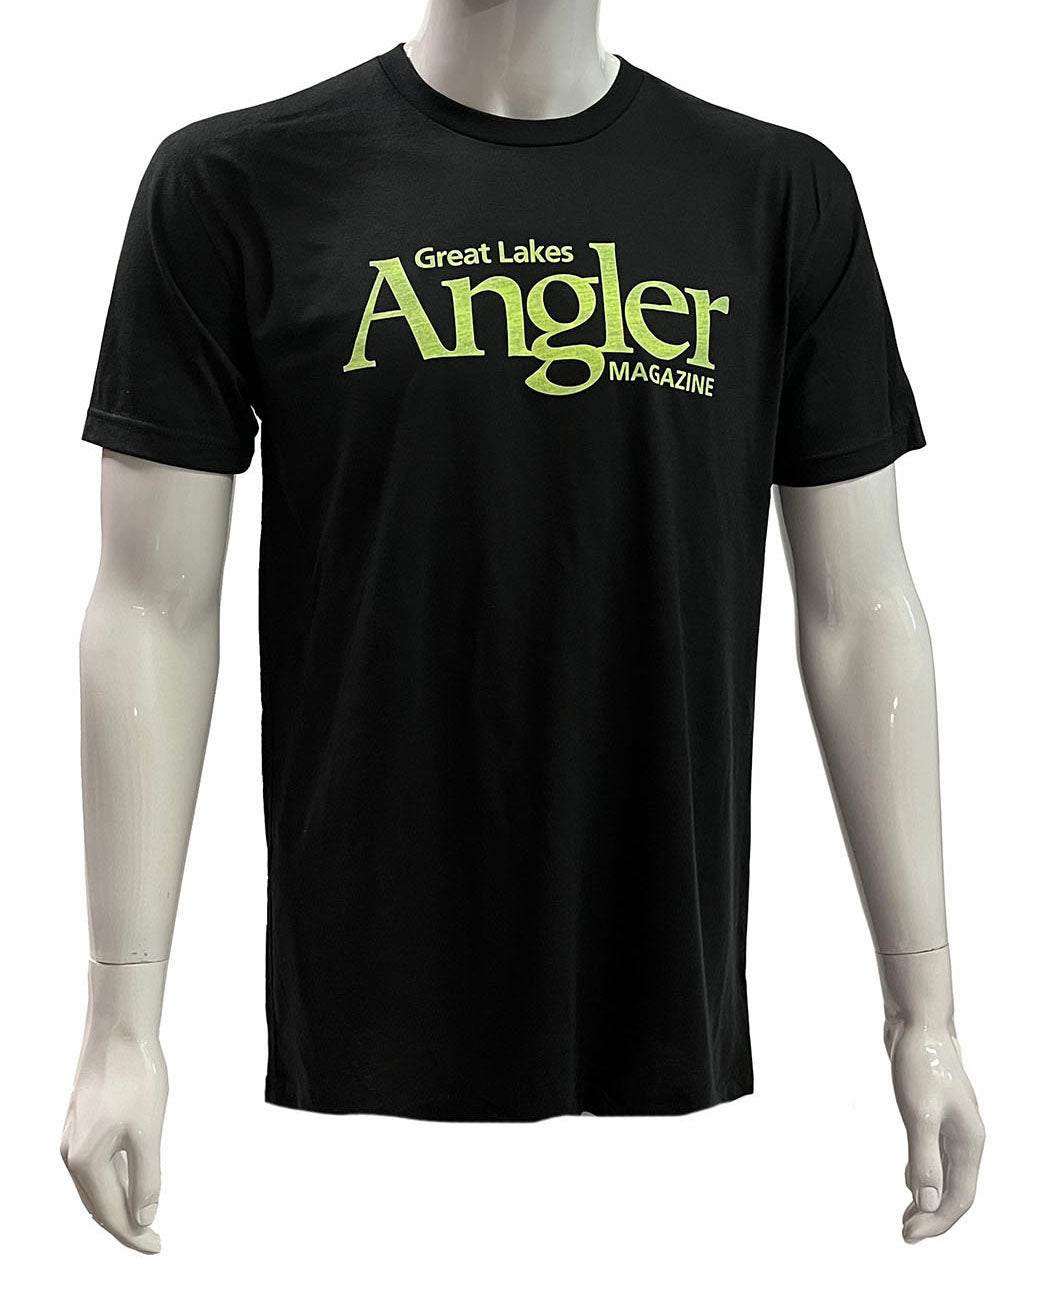 Great Lakes Angler Tee Shirt Black w/ Chartreuse Logo